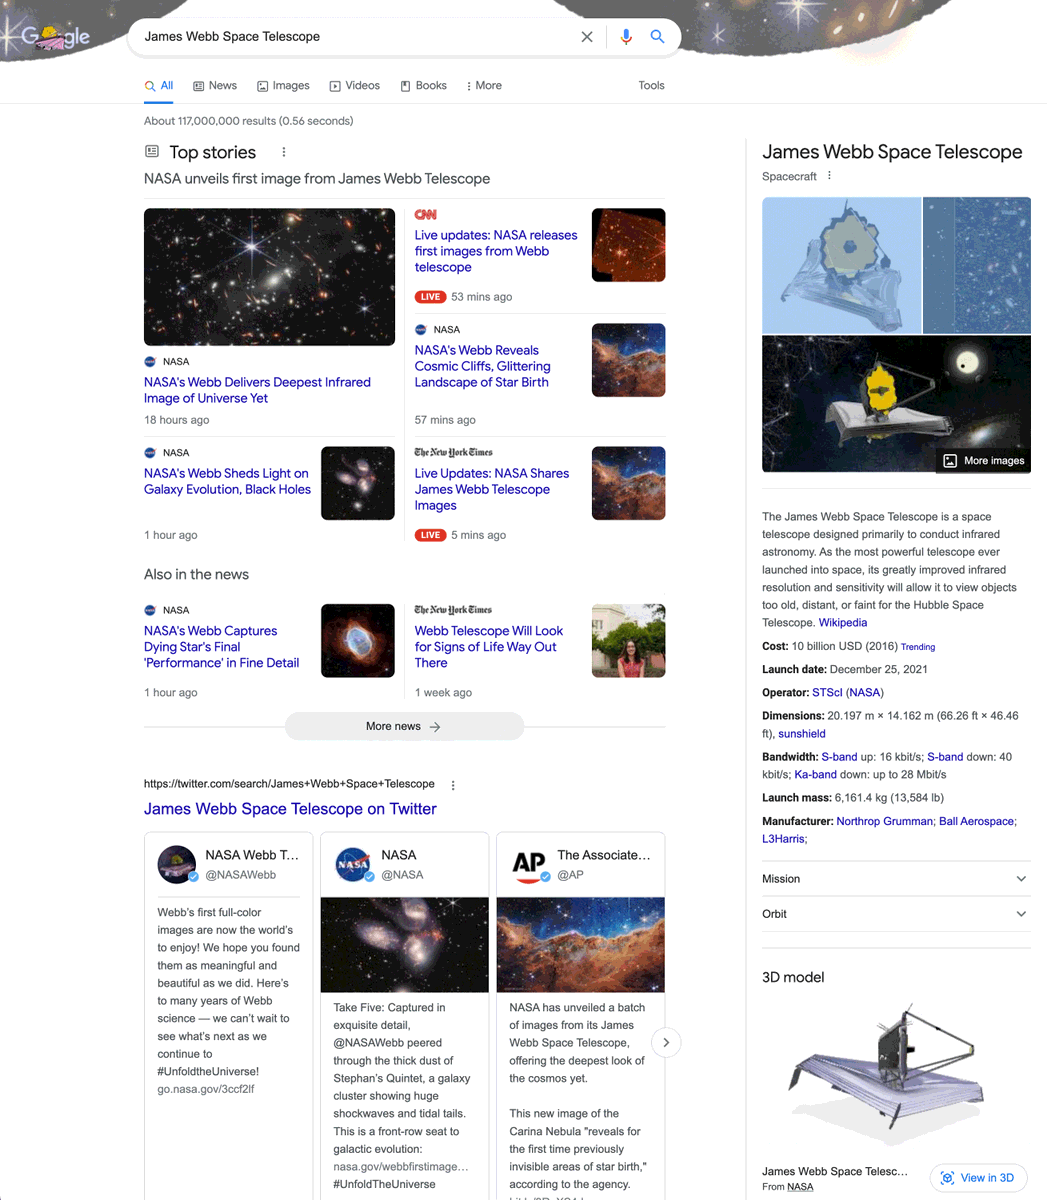 RT @rustybrick: Google Doodle For James Webb Space Telescope - Deepest Photo Of Universe
 https://t.co/EfyJqogUkp https://t.co/vtlfP8AUkh